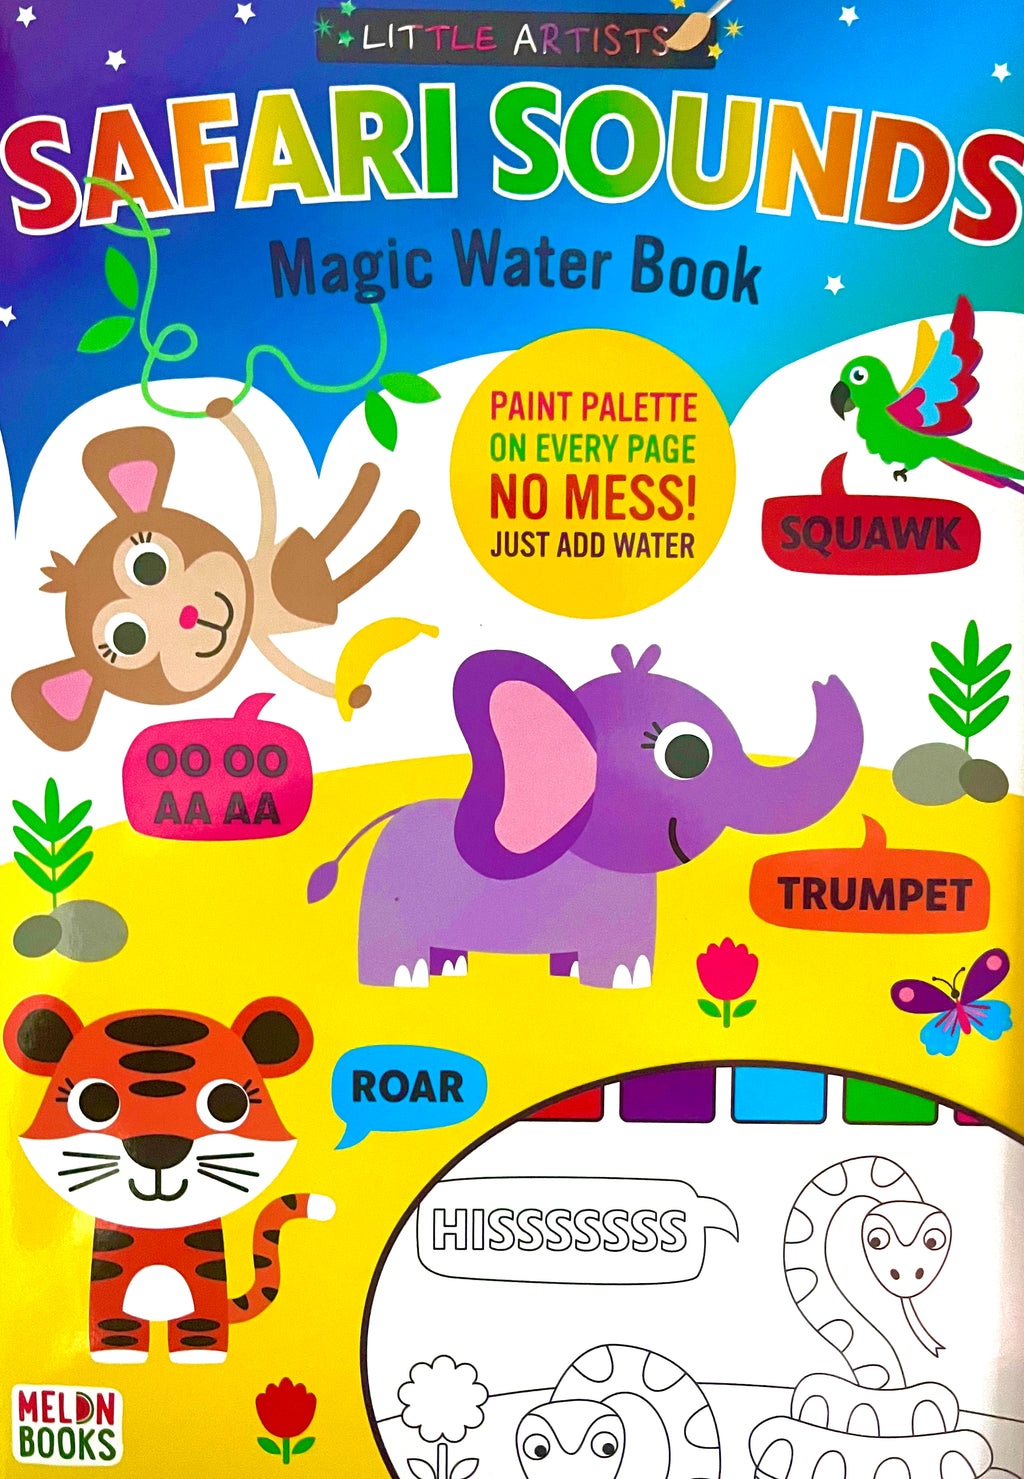 Little Artists: Safari Sounds! (Magic Water Book)